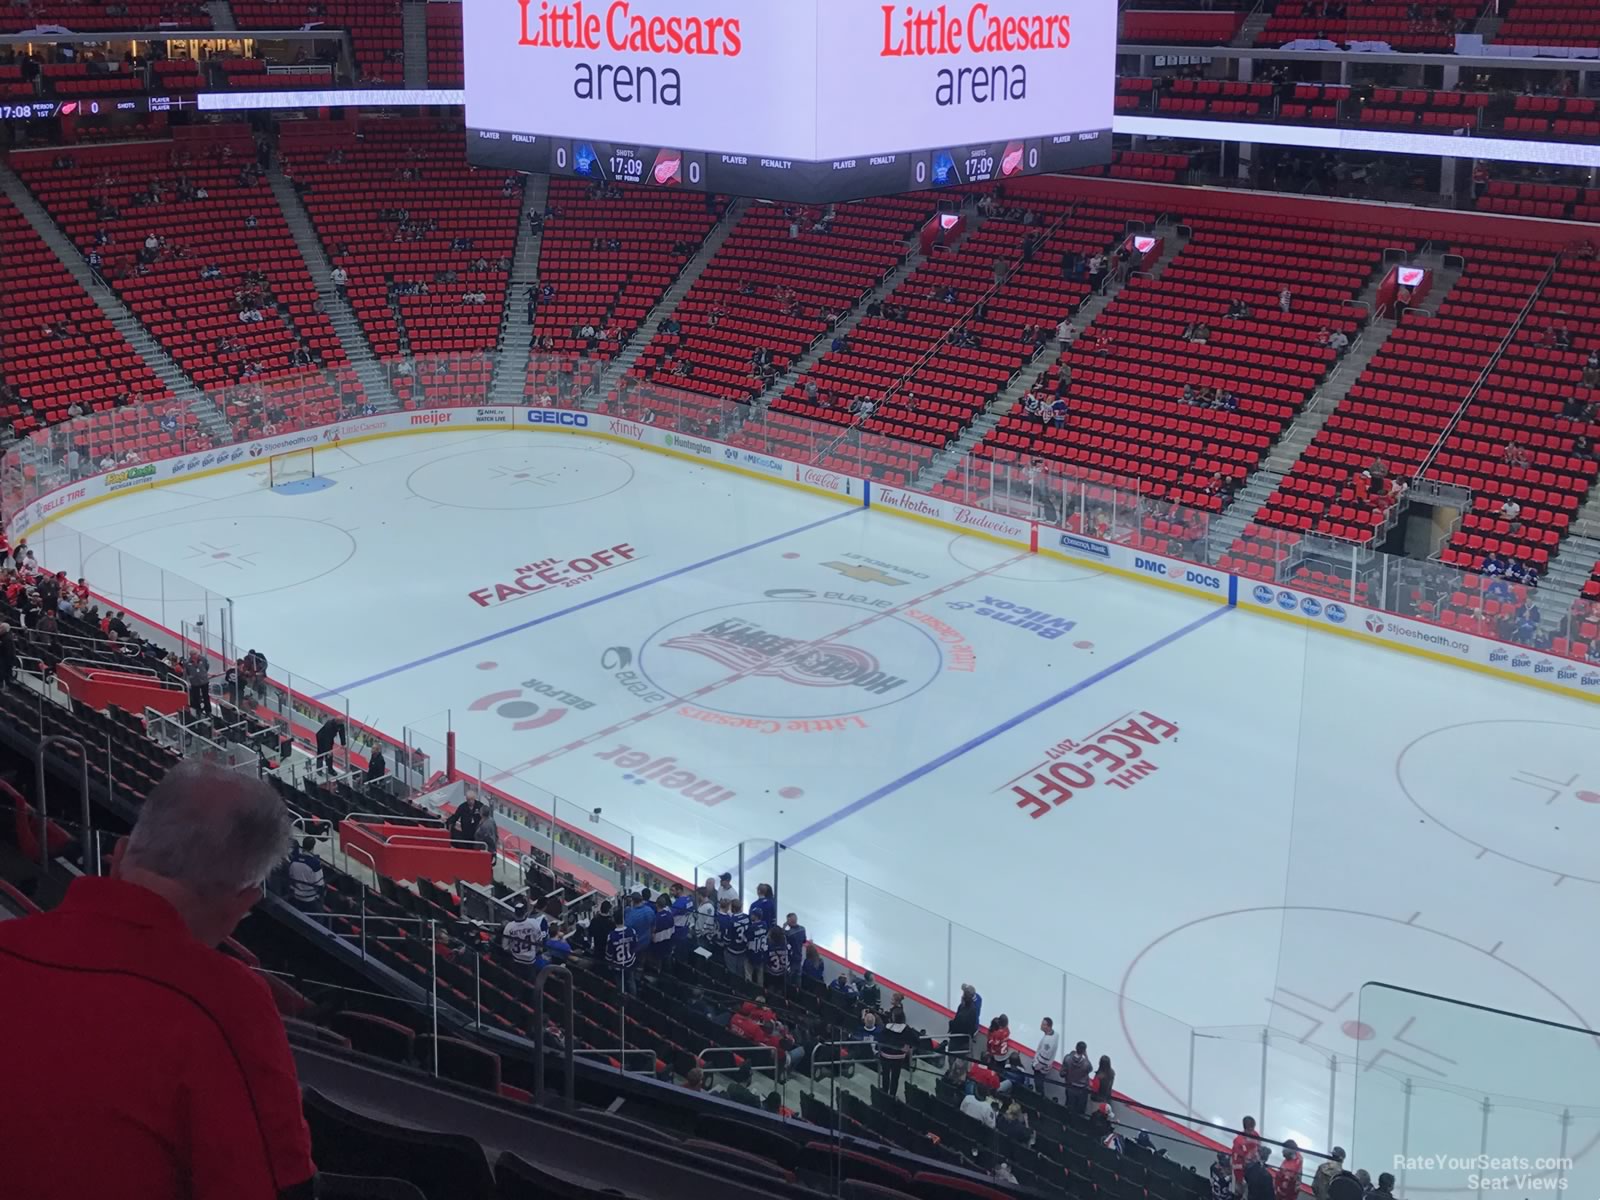 mezzanine 24, row 4 seat view  for hockey - little caesars arena